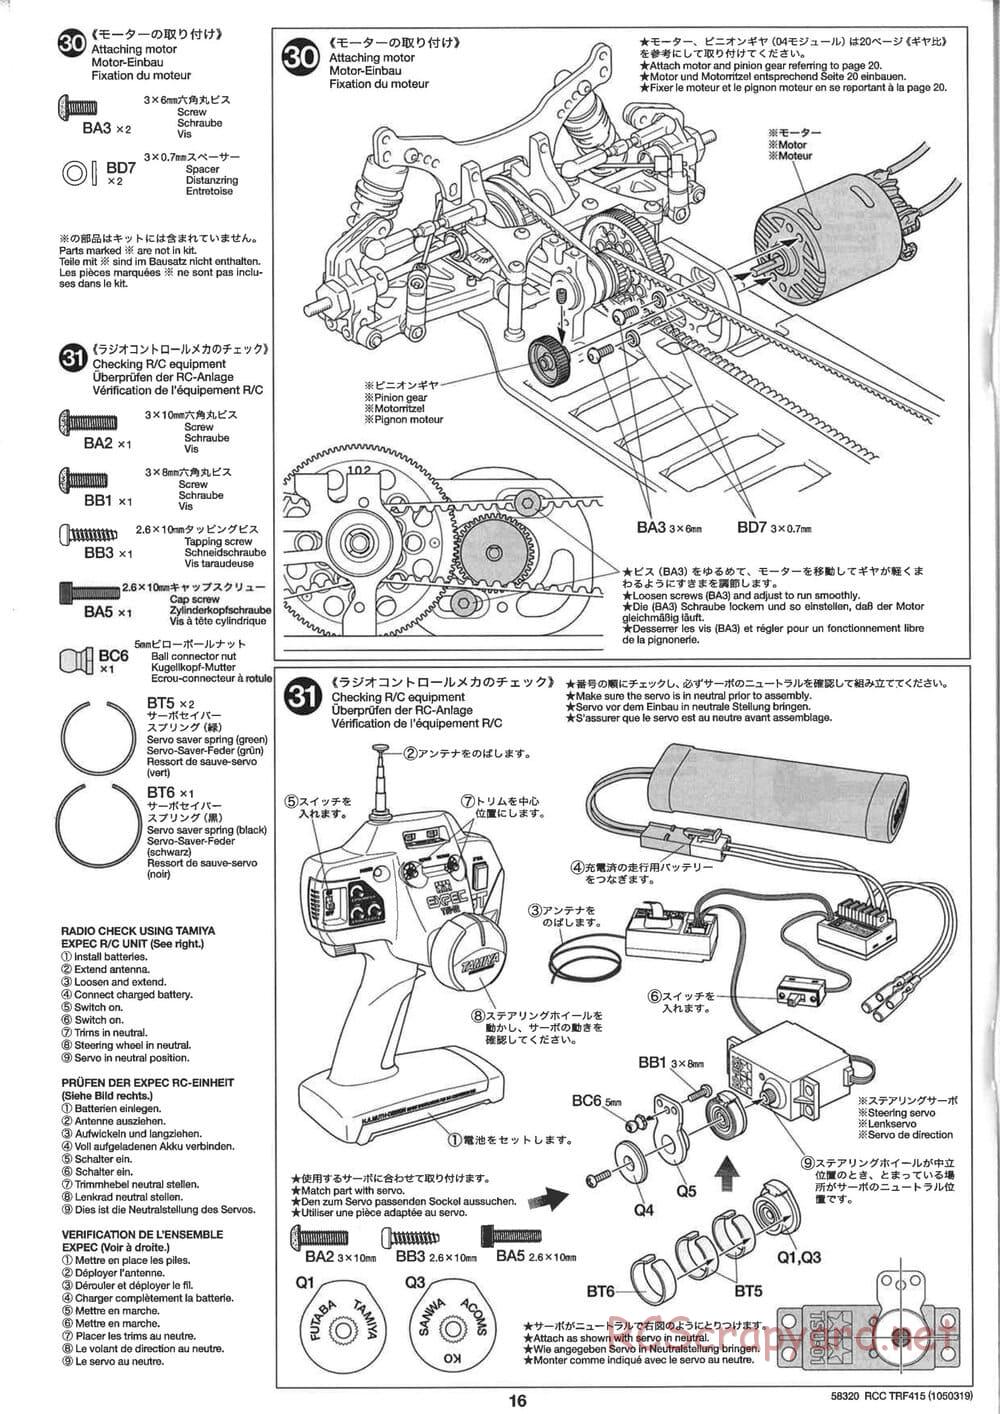 Tamiya - TRF415 Chassis - Manual - Page 16